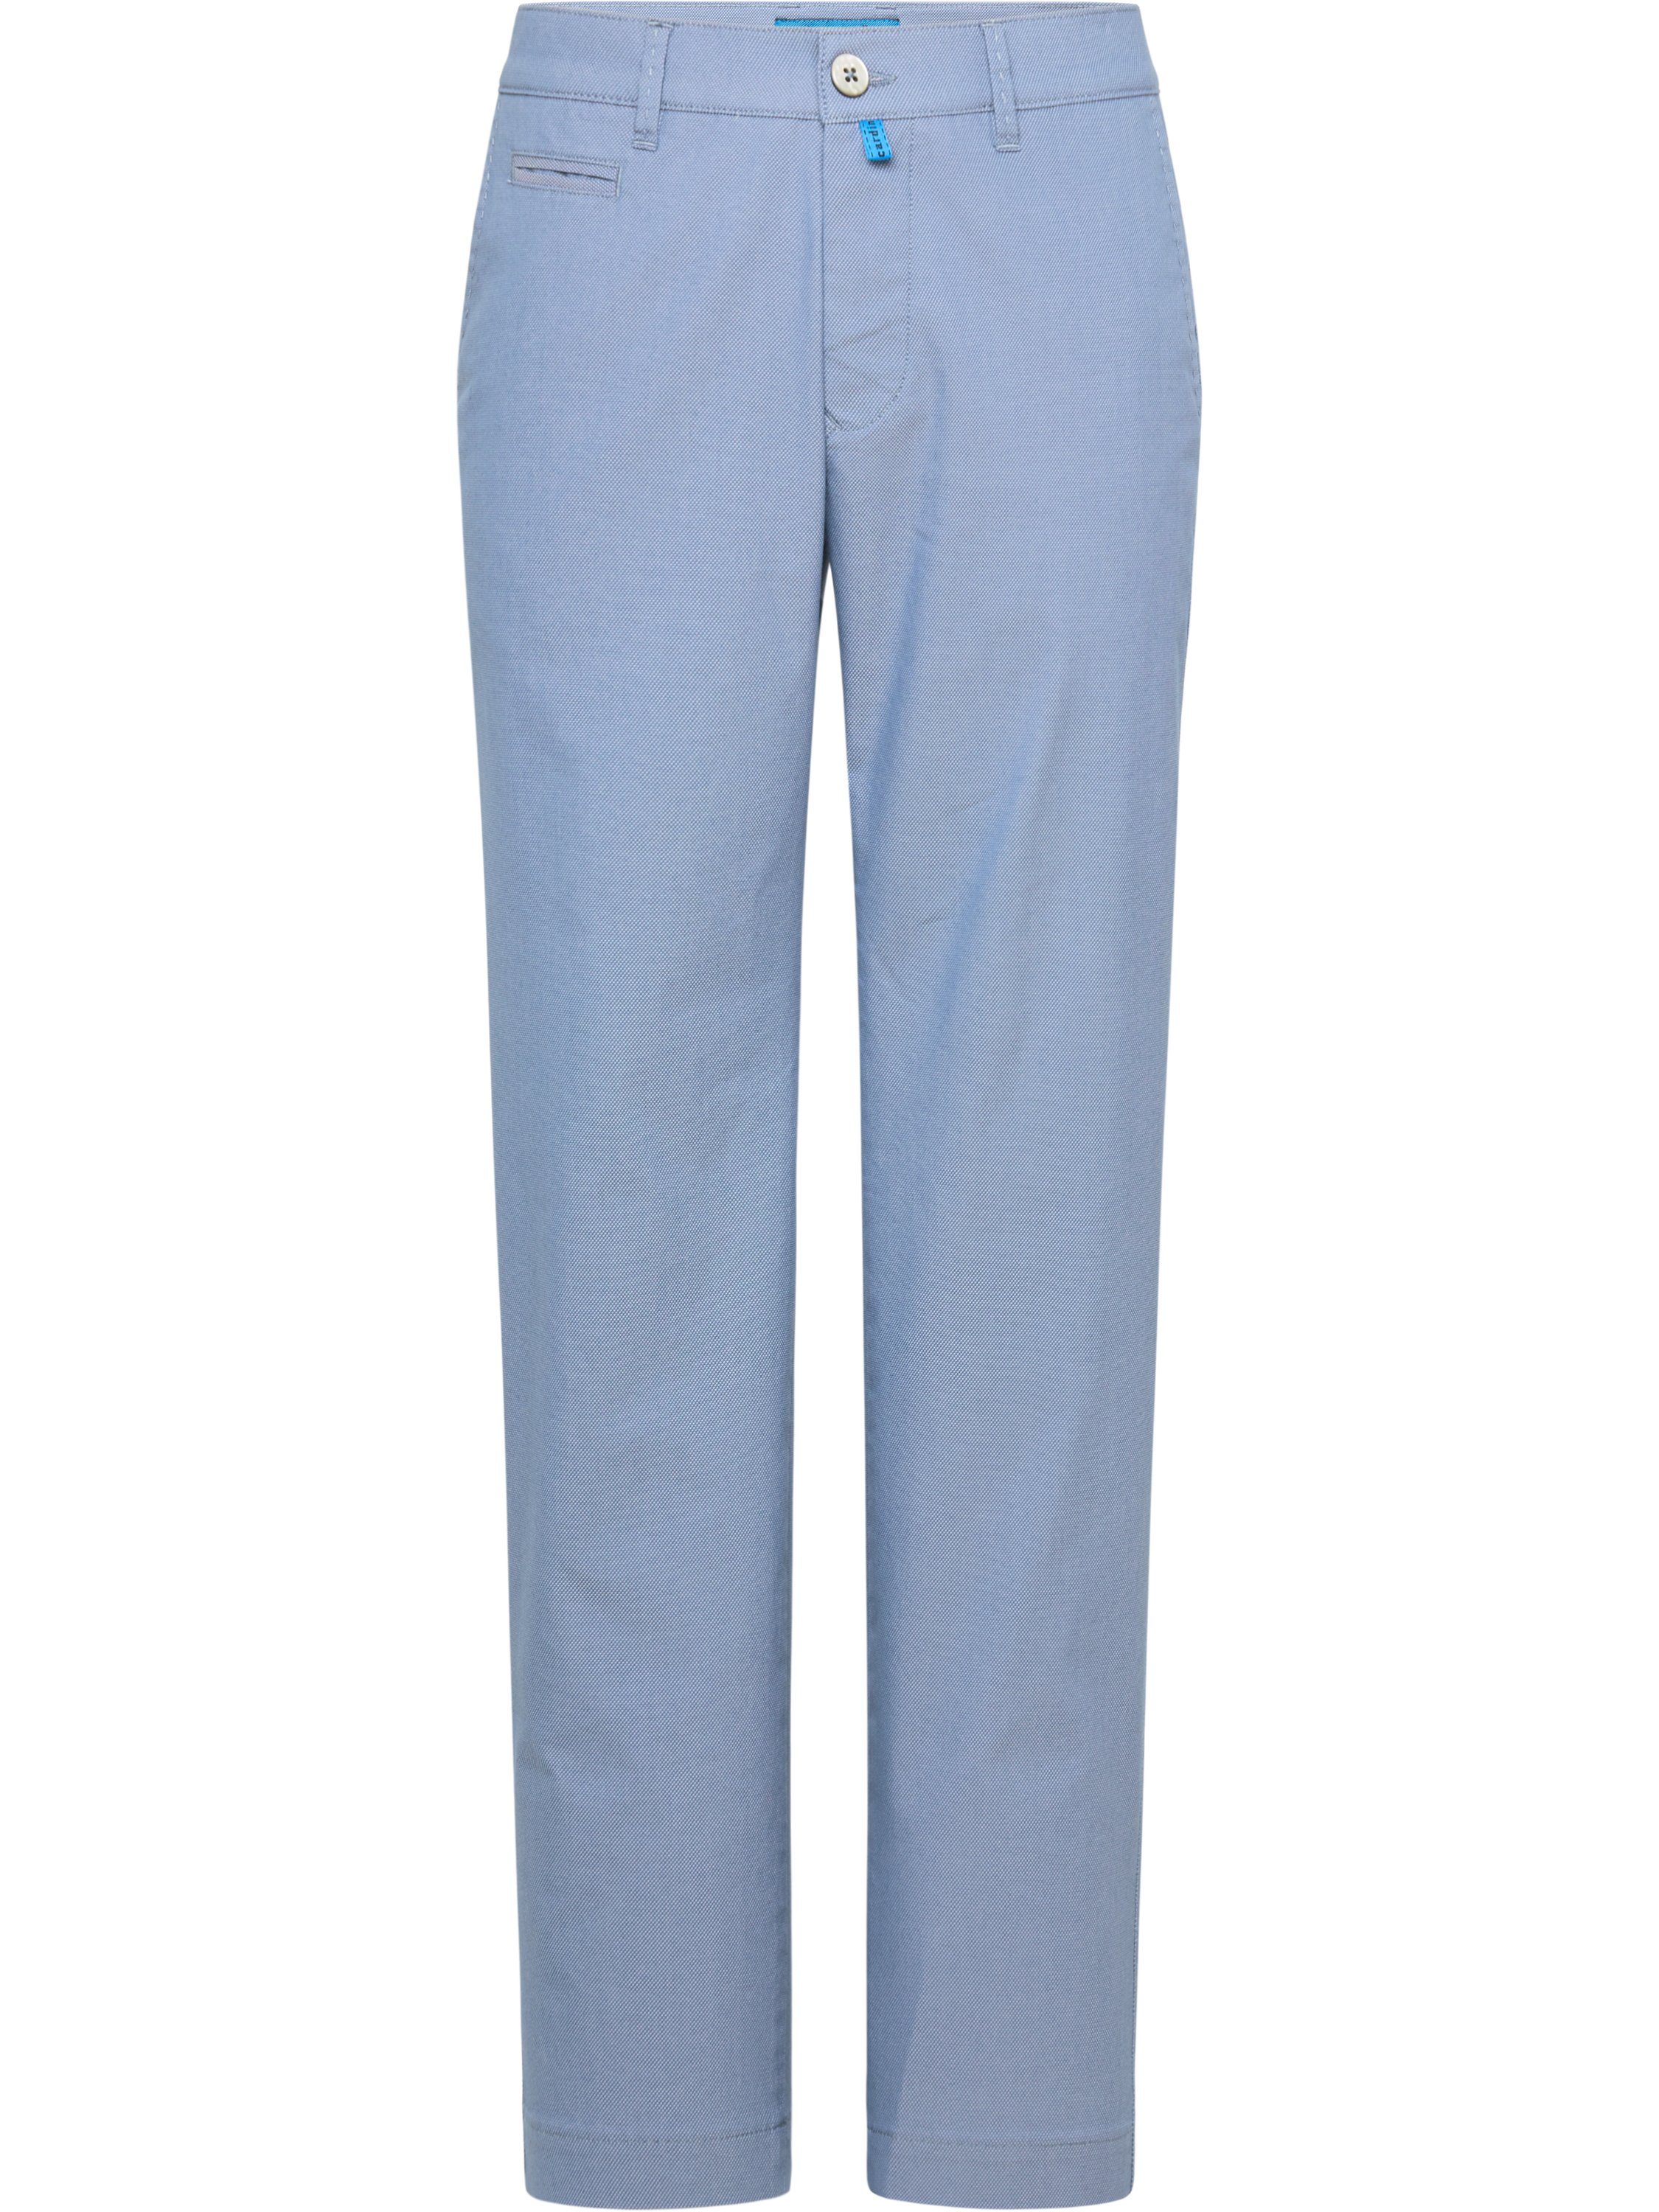 Pierre Cardin 5-Pocket-Jeans PIERRE CARDIN LYON FUTUREFLEX CHINO light blue structured 33757 2277.6 65 65